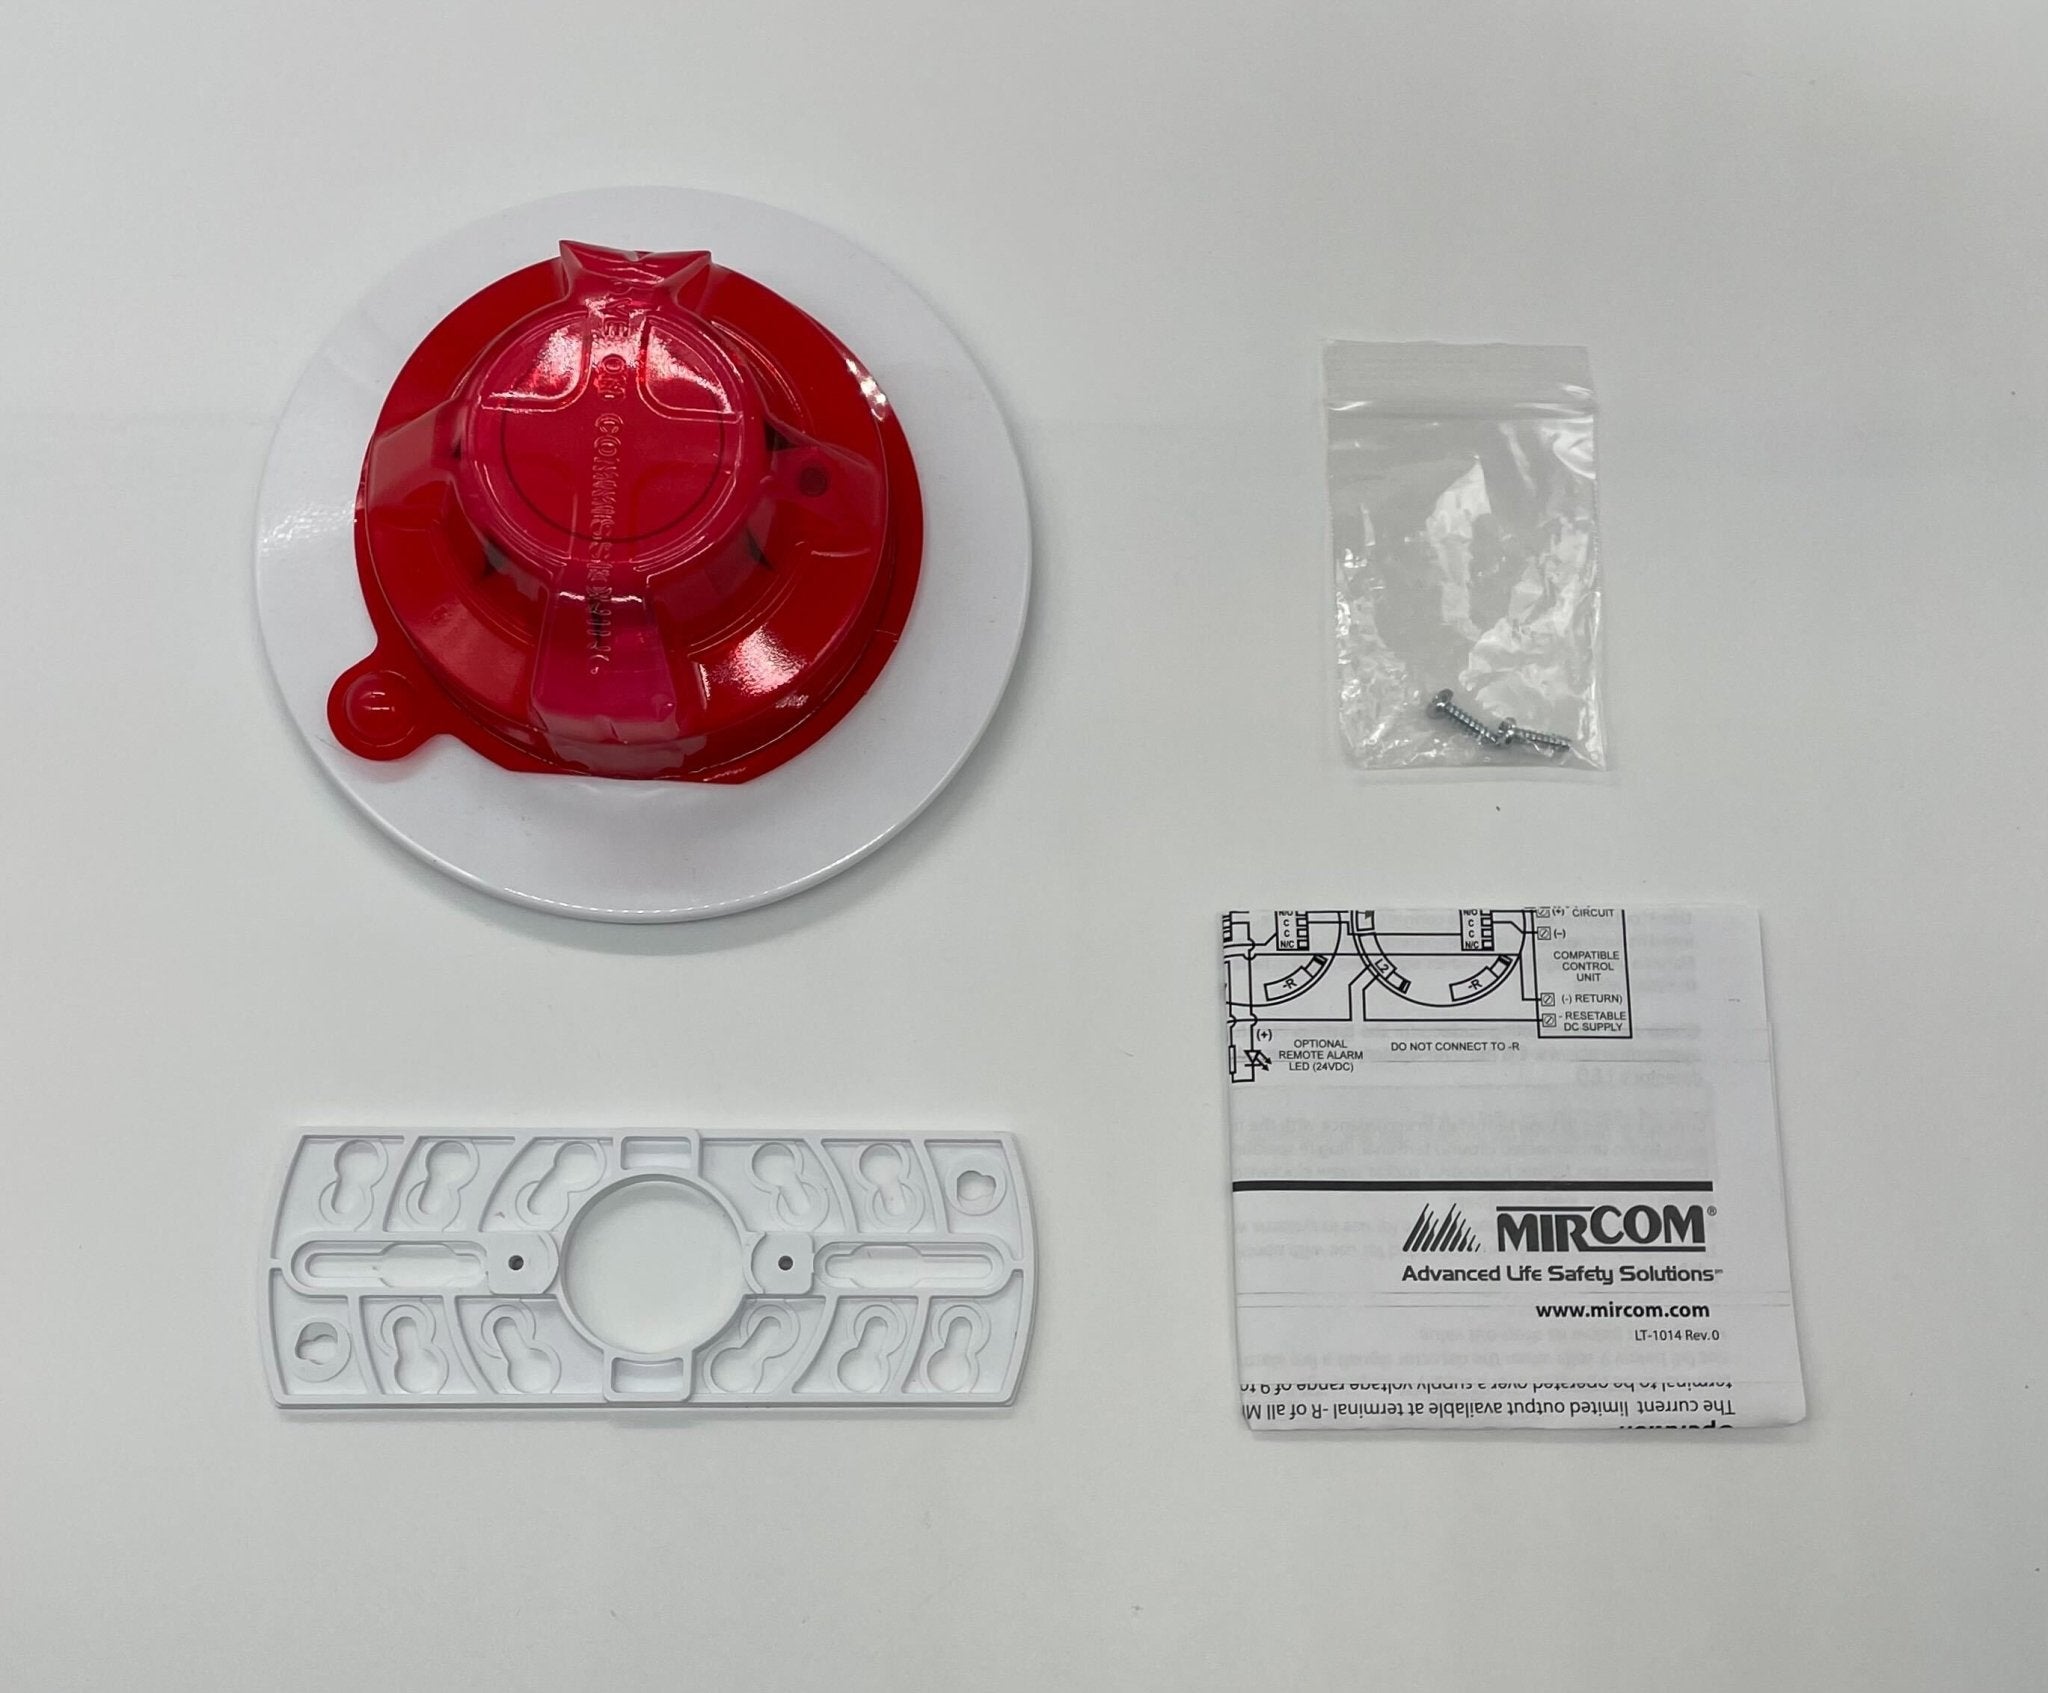 Mircom MPD-65PK-4 Photoeletric Detector - The Fire Alarm Supplier